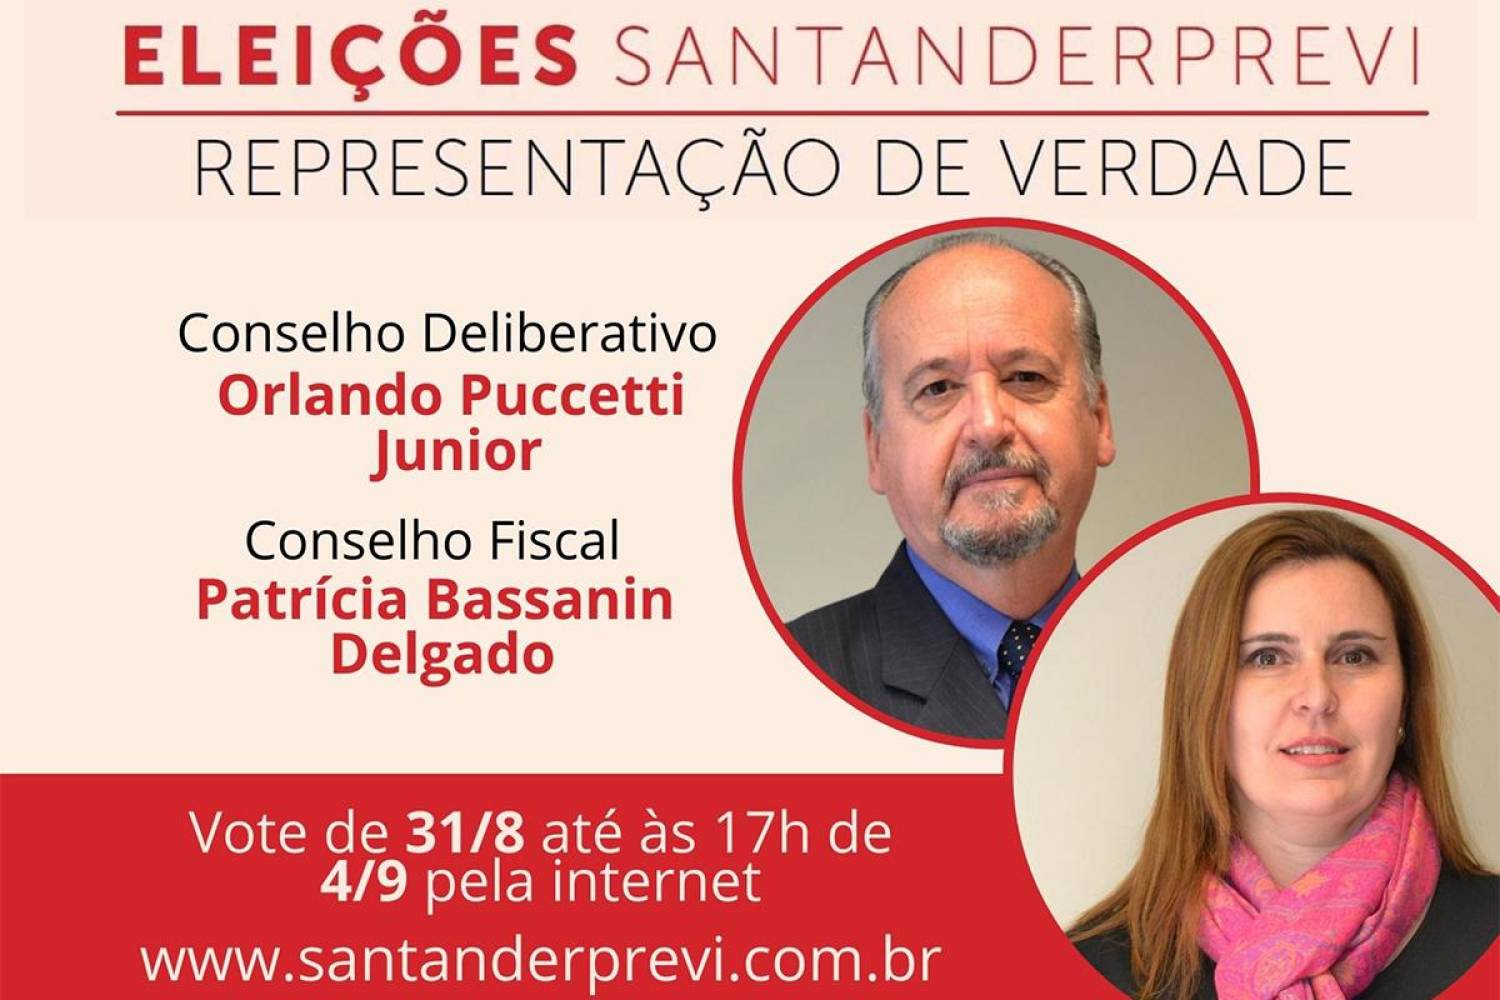 Eleições SantanderPrevi: Sindicato apoia Patrícia Bassanin e Orlando Puccetti